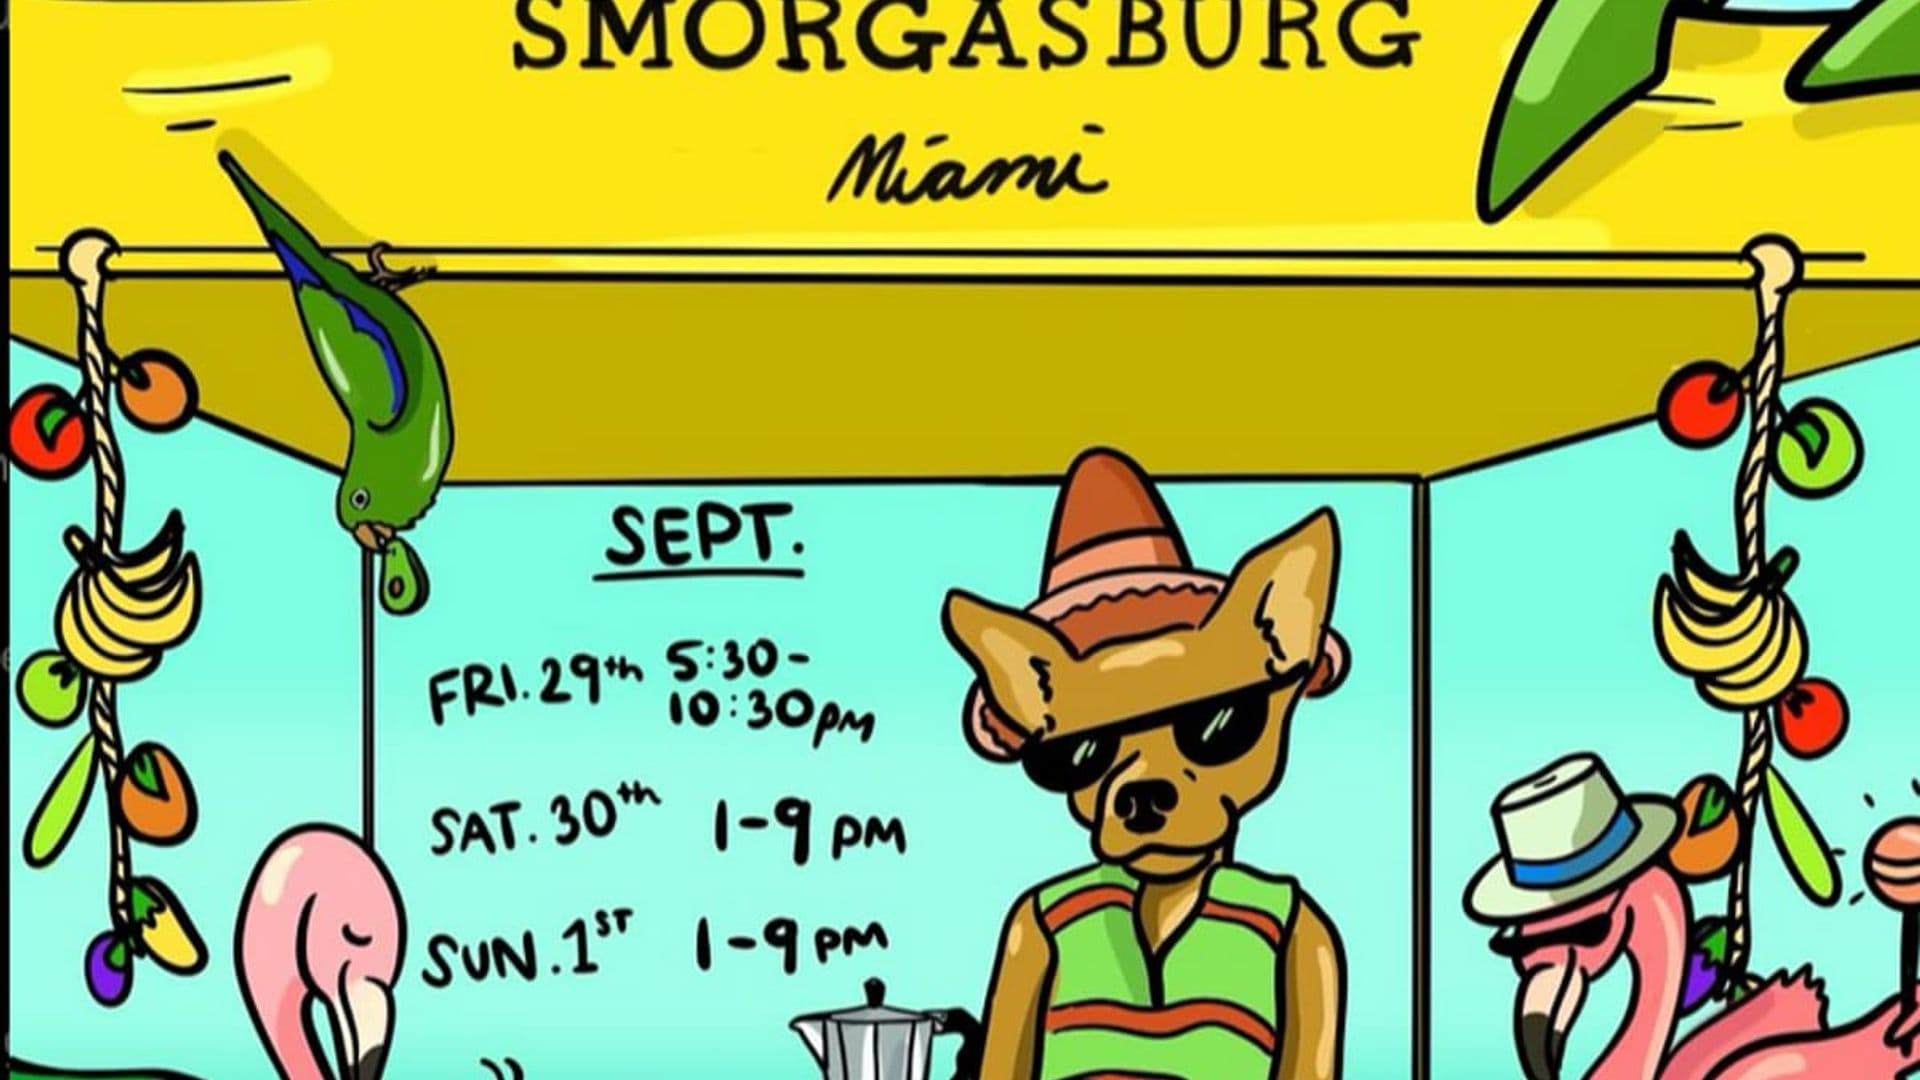 Smorgasburg Miami celebrates Hispanic Heritage Month with food, drinks, and music